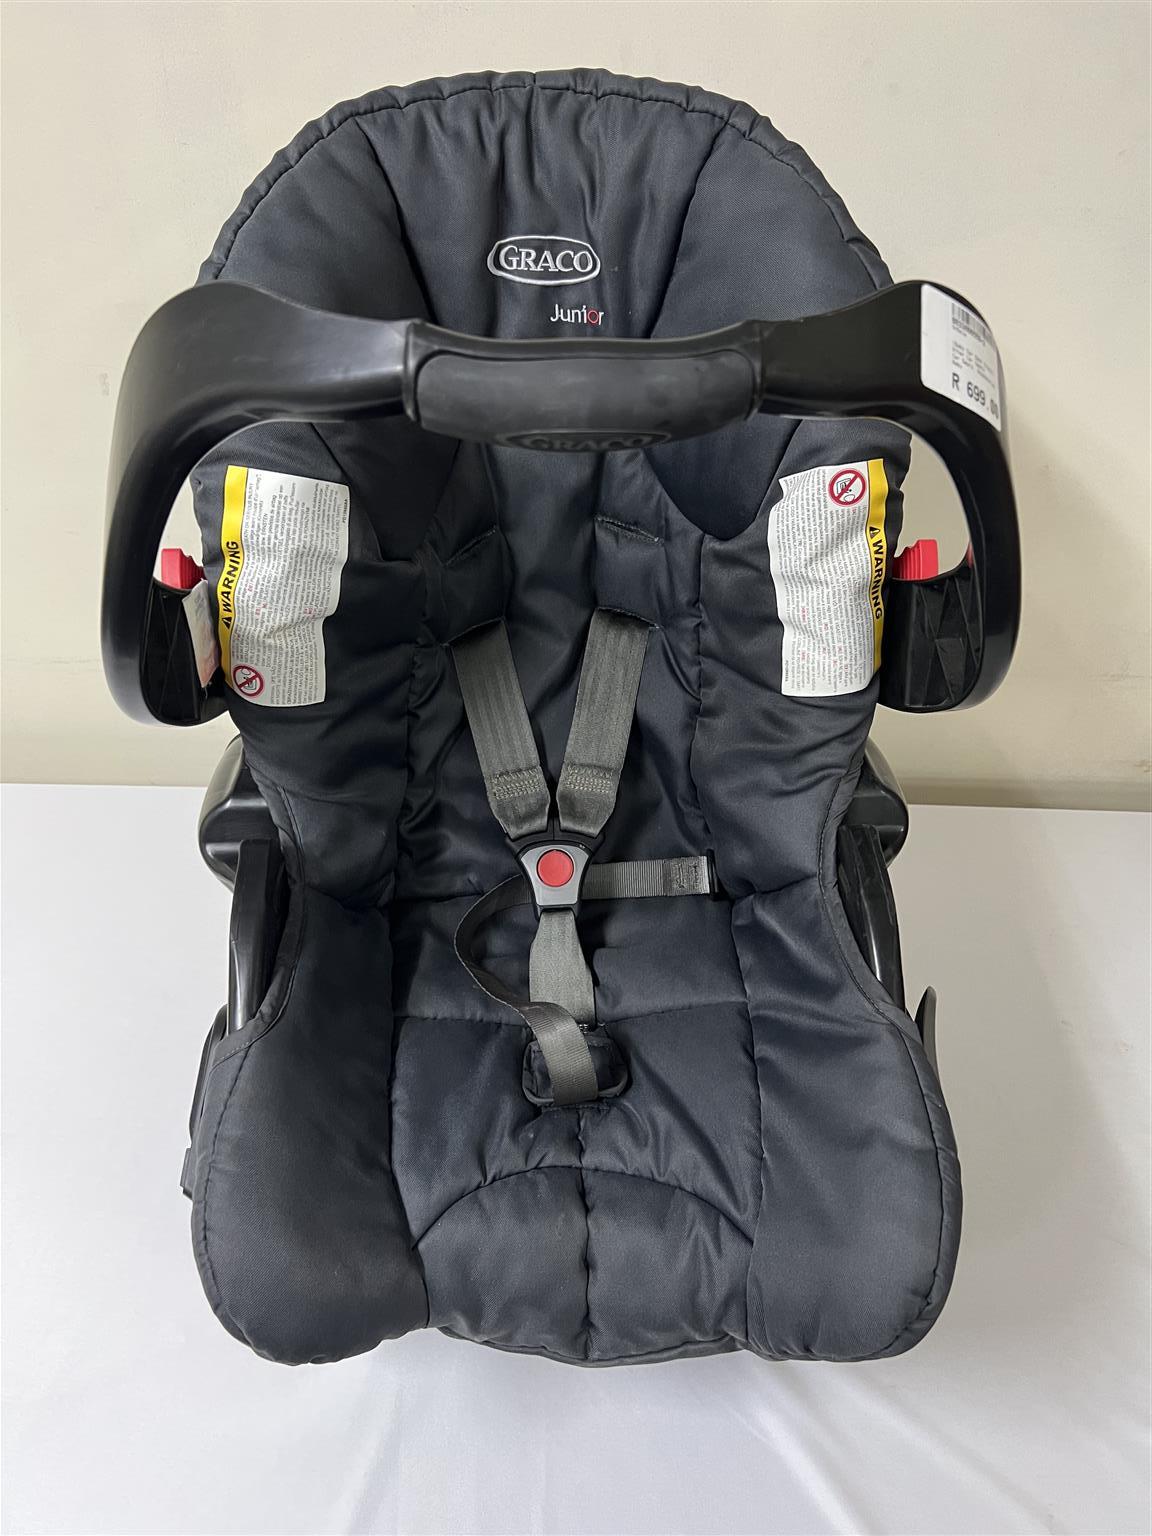 Baby Car Seat Graco - B033066559-2